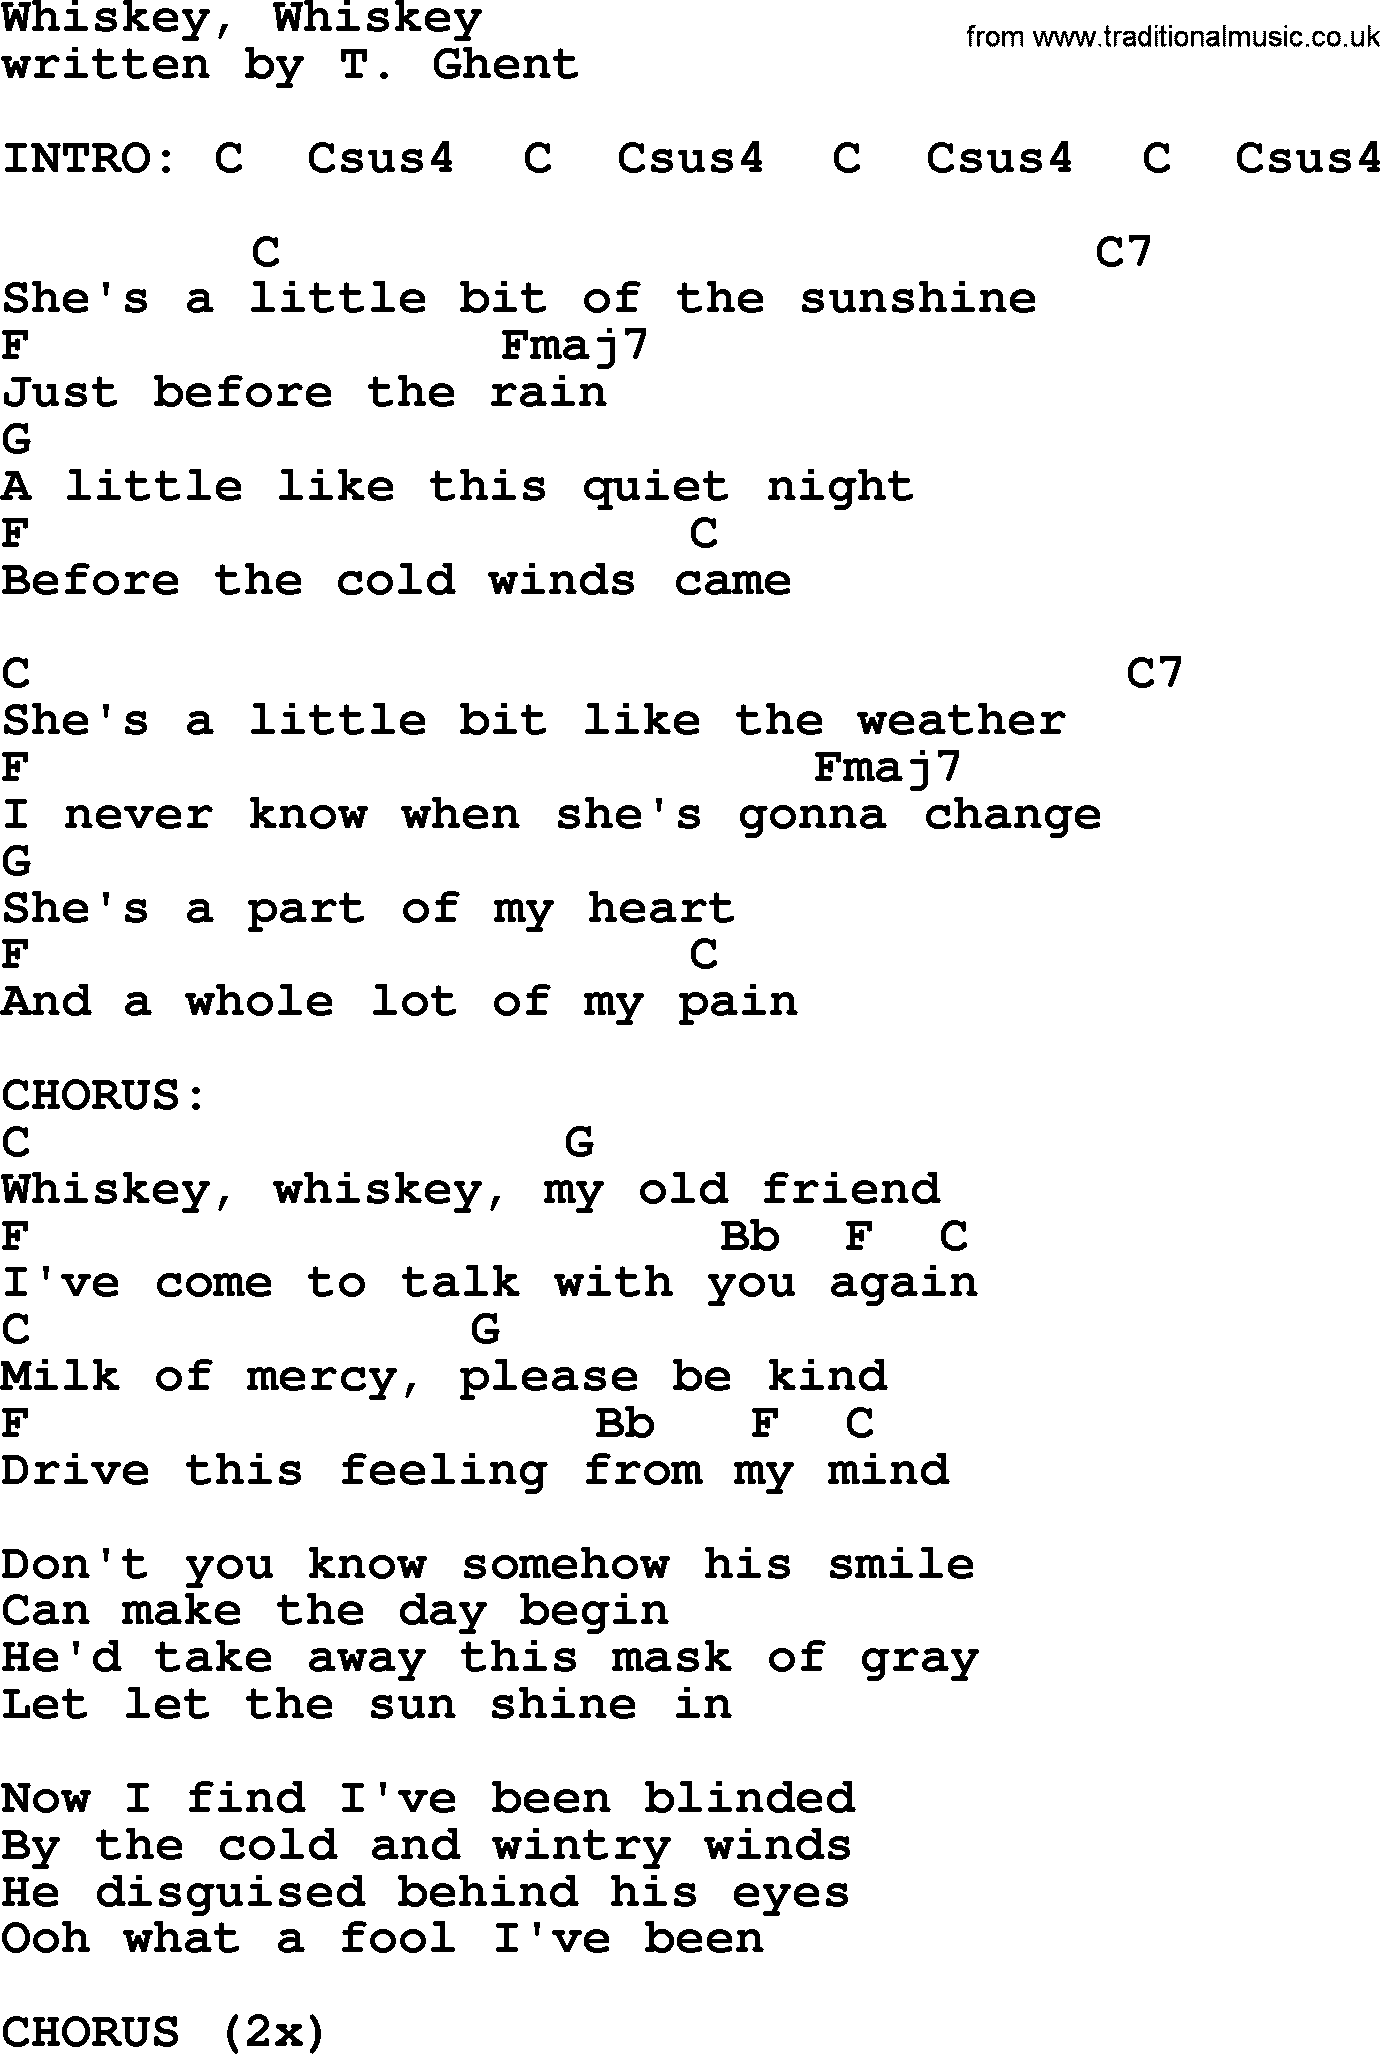 Kris Kristofferson song: Whiskey, Whiskey lyrics and chords